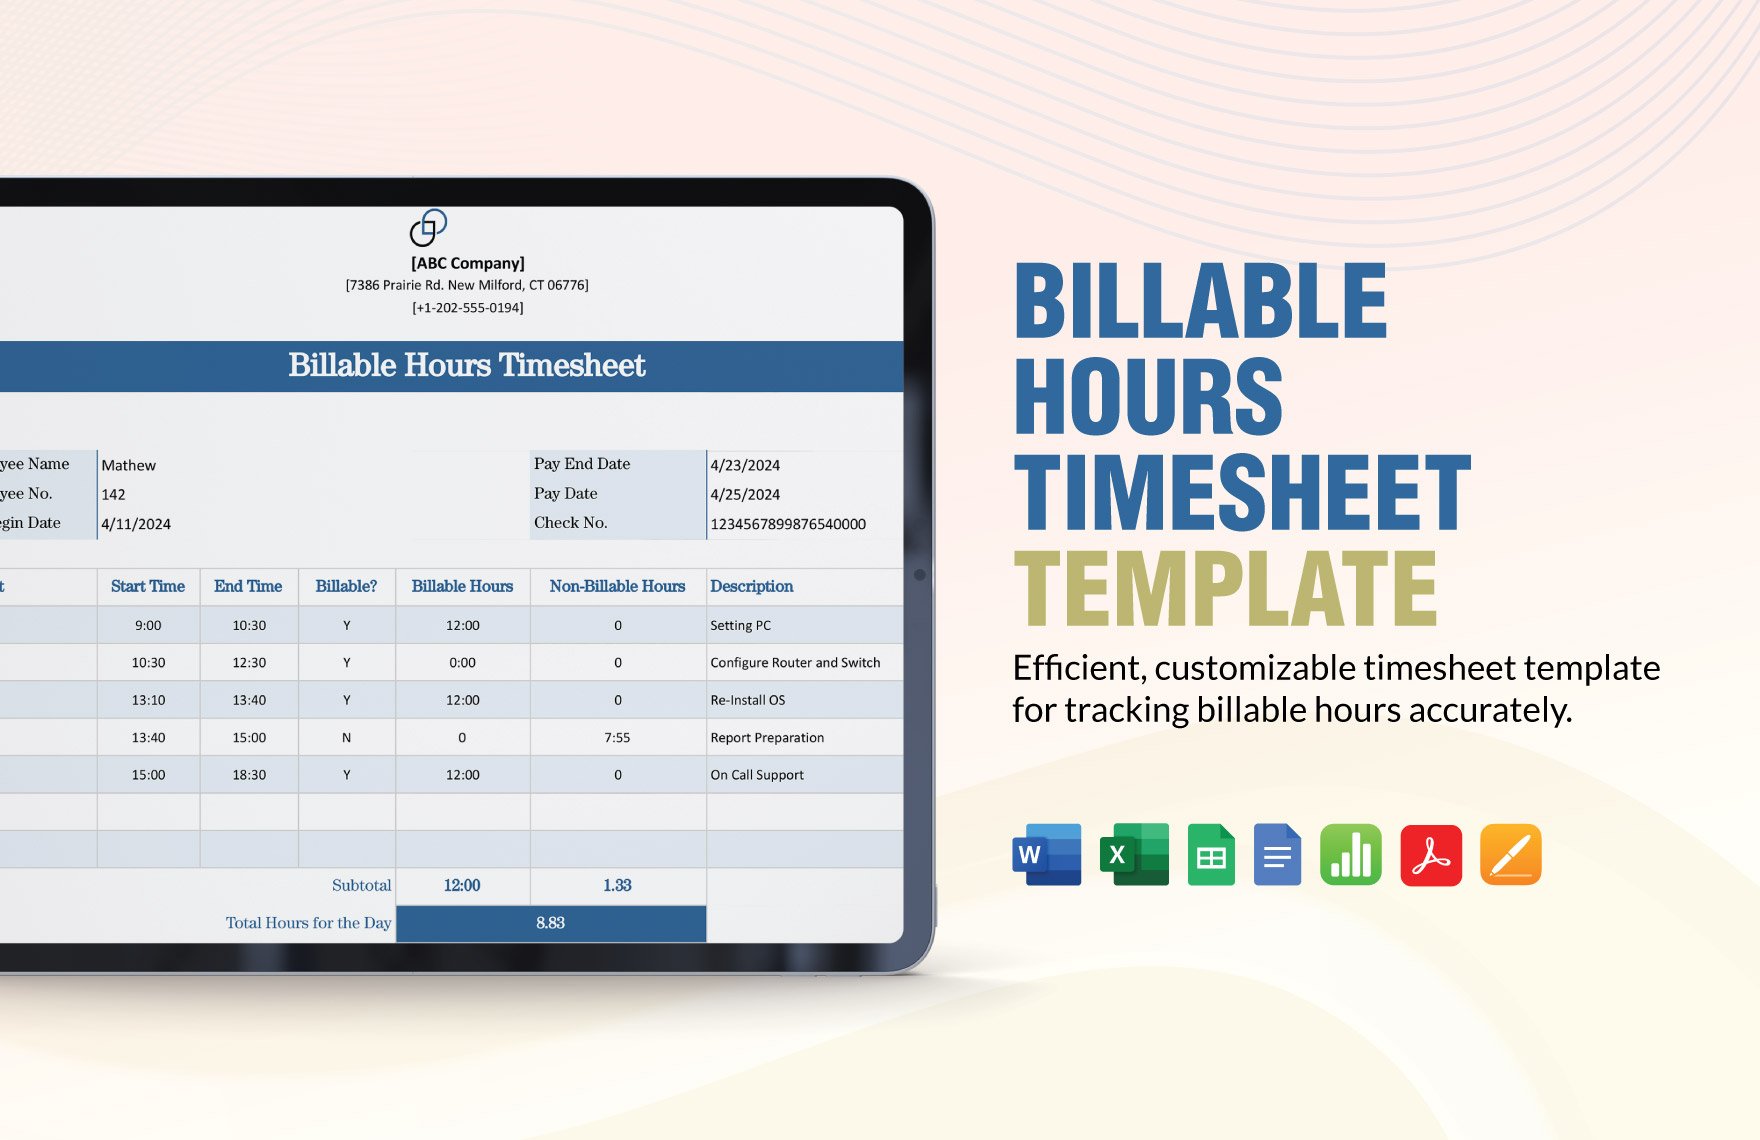 Billable Hours Timesheet Template